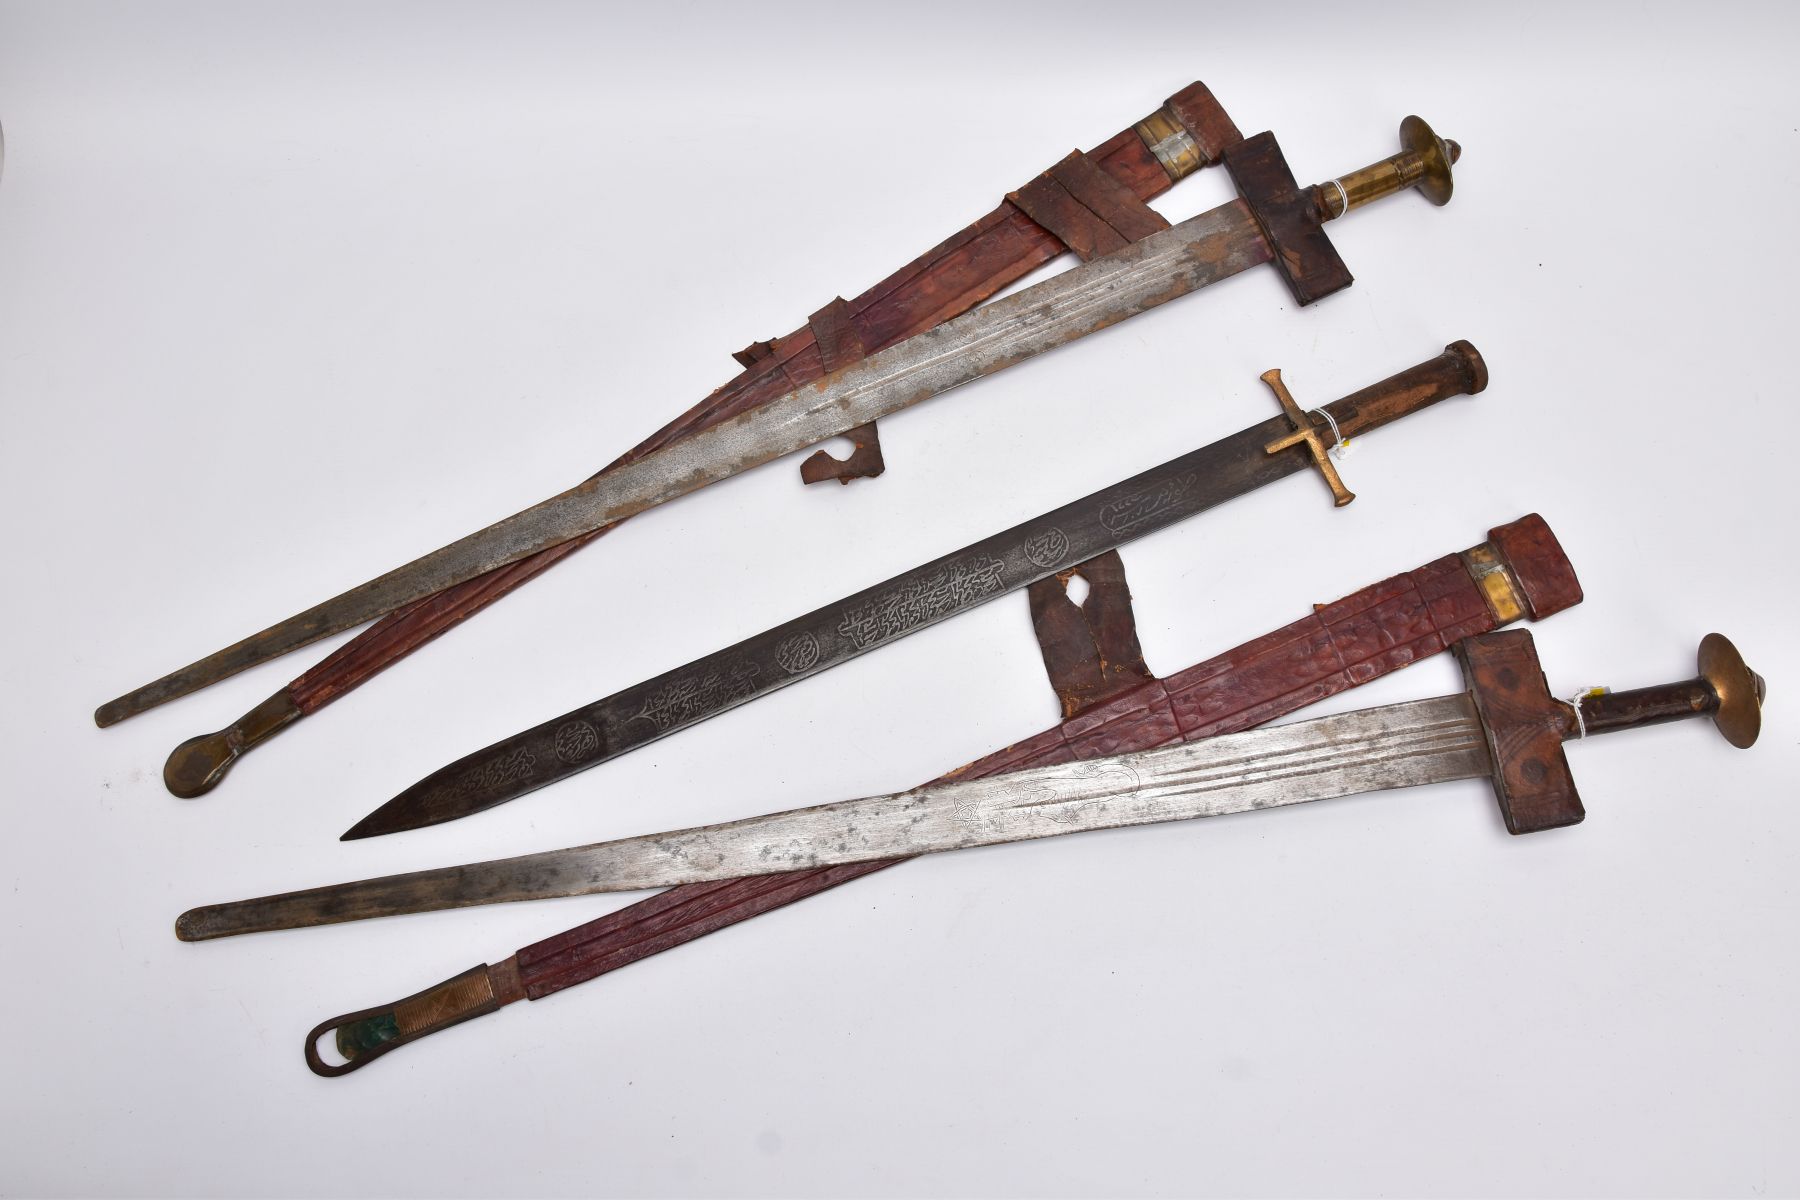 AN ARABIC DESIGN SHORT SWORD, wooden grip with gold coloured metal cross guard, blade has Arabic